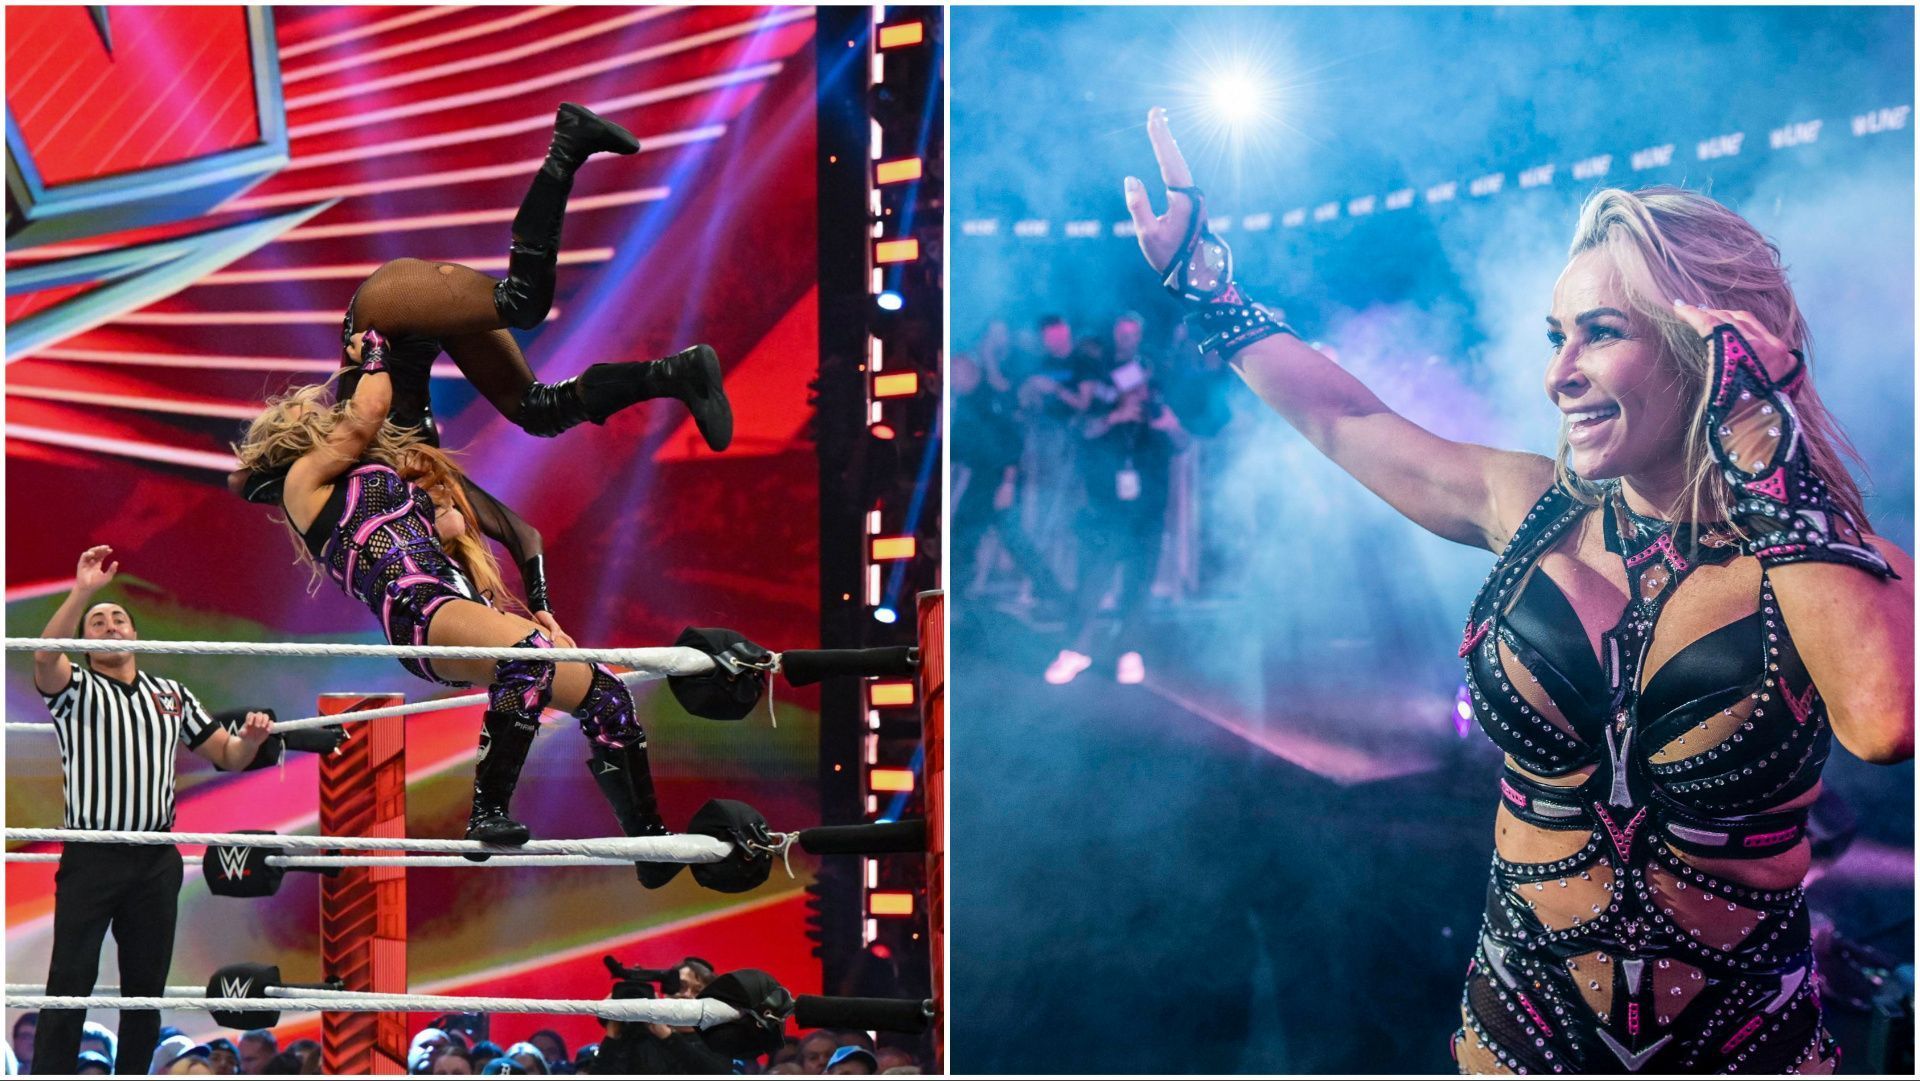 Natalya vs. Becky Lynch on RAW, Natalya waves to the WWE Universe in London